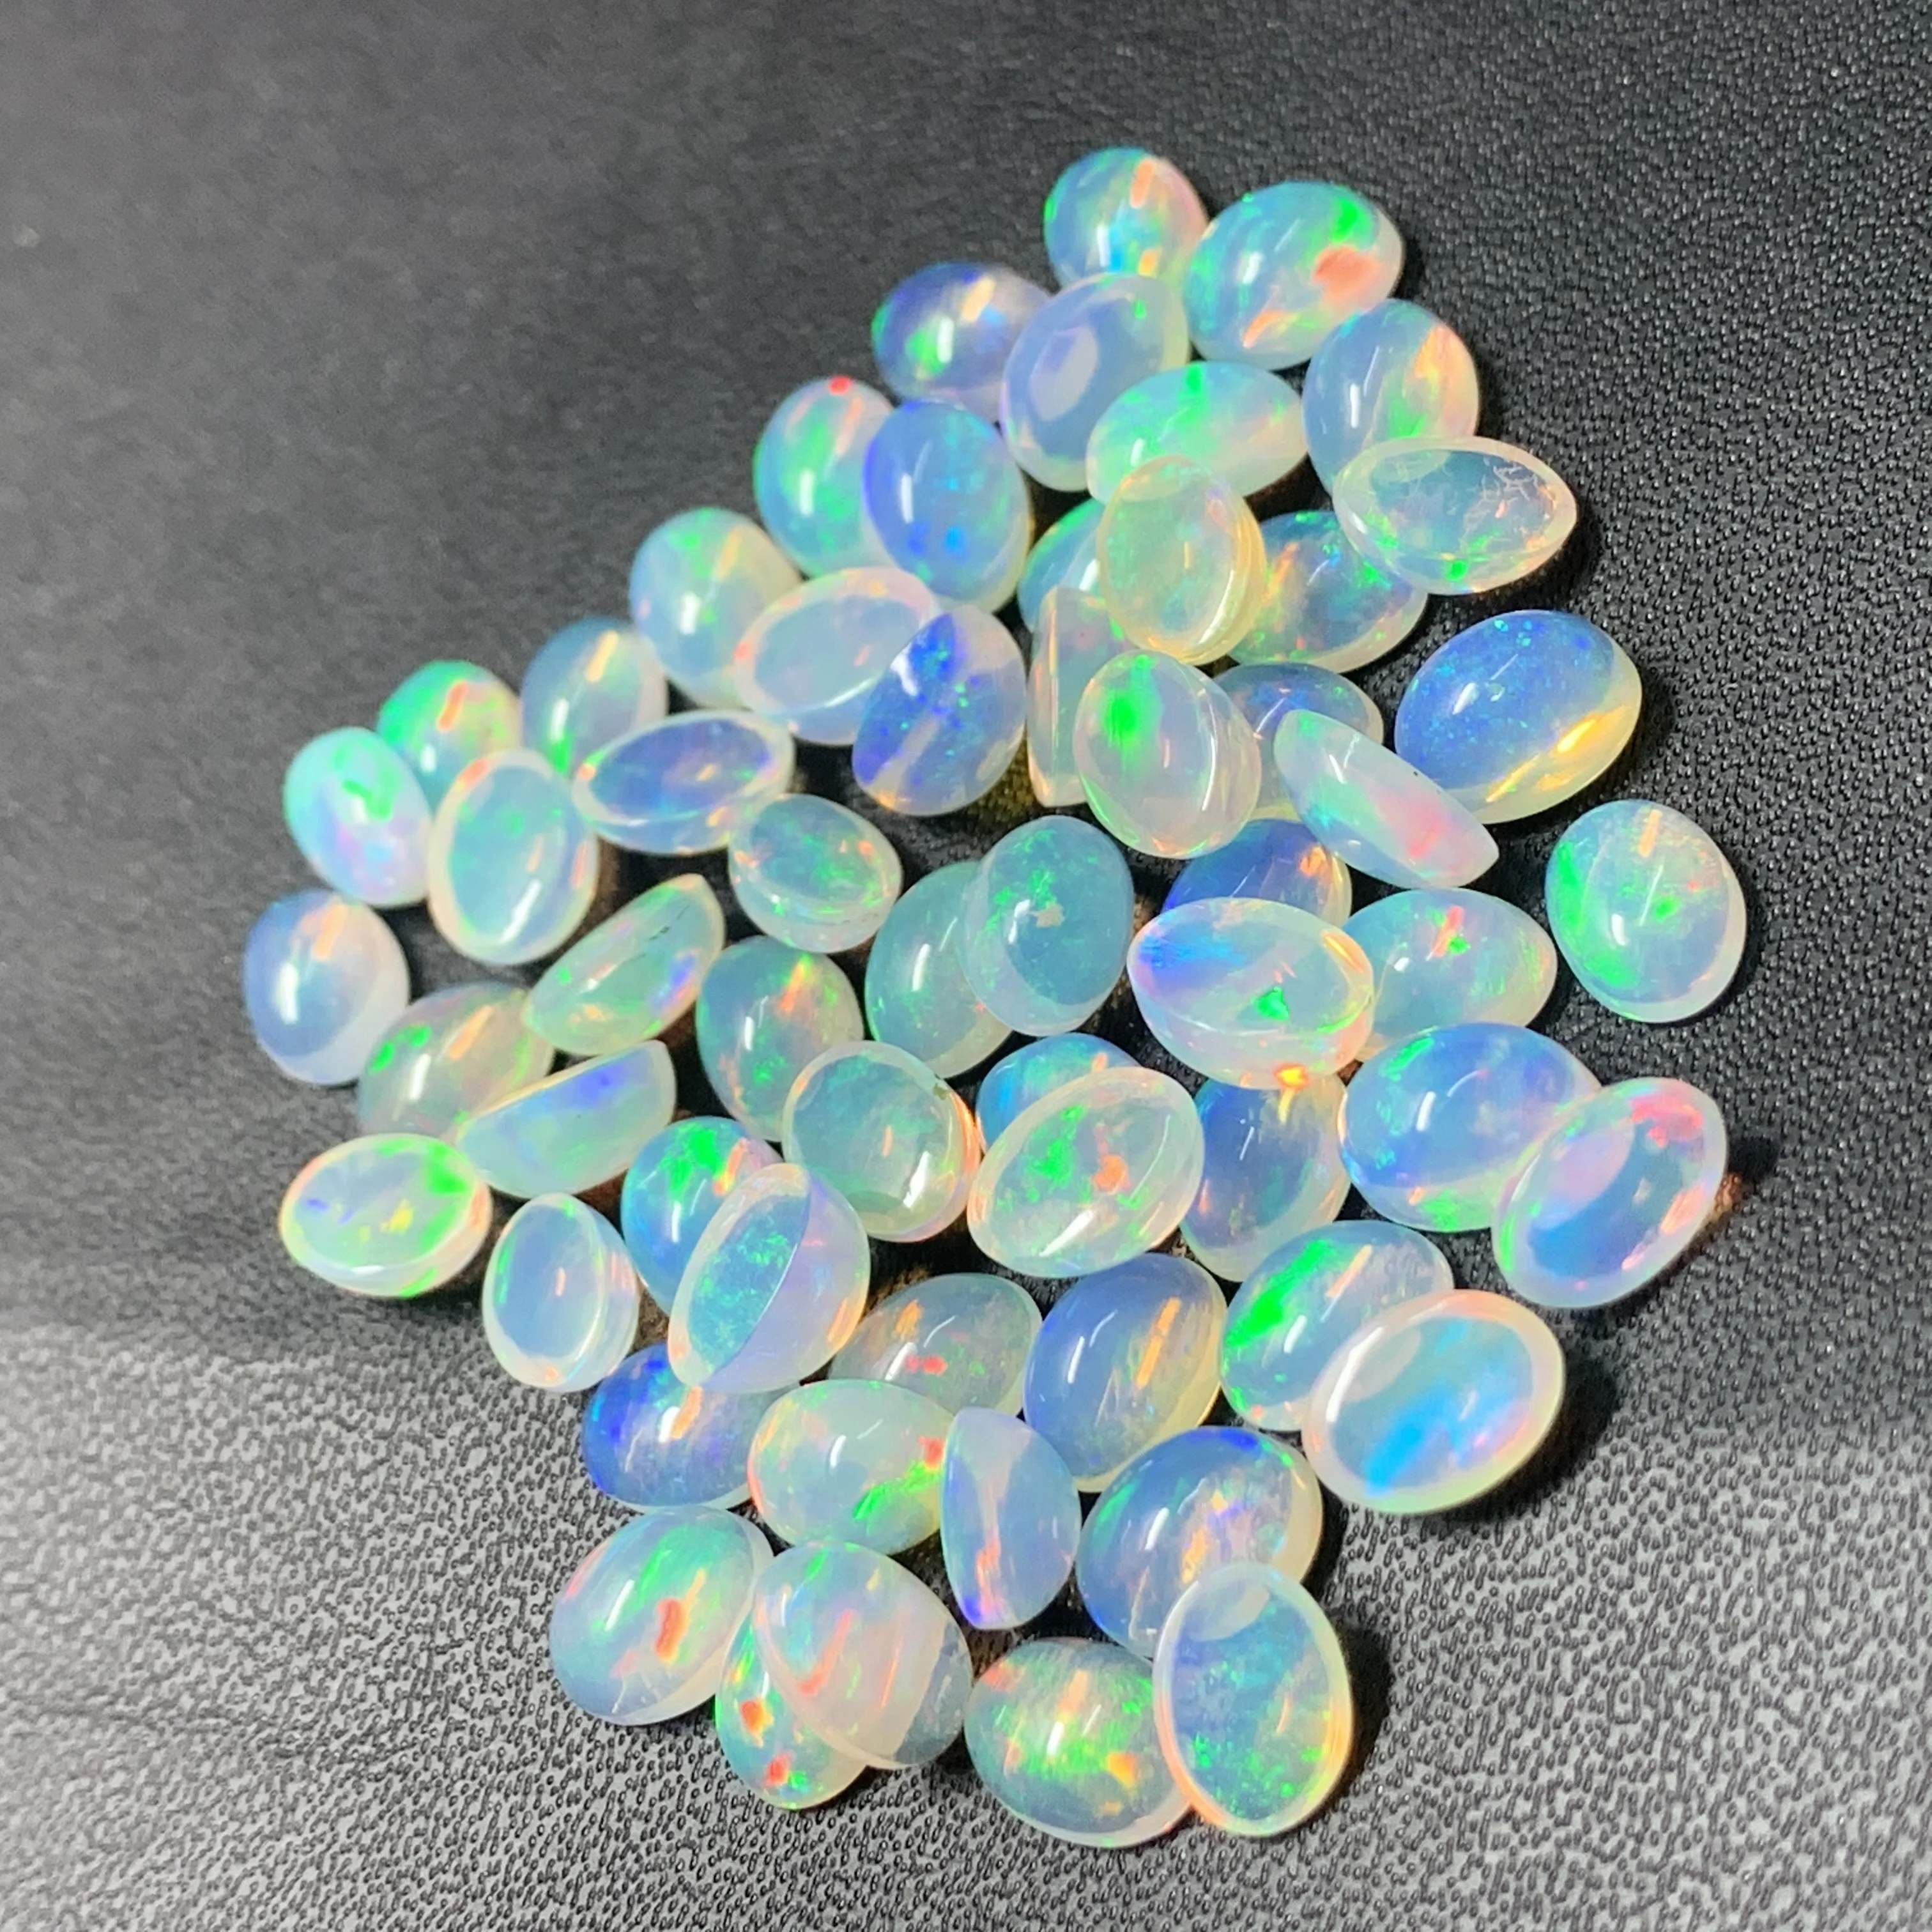 Natural Blue Ethiopian Opal Faceted Cut Oval Gemstone Loose Gemstones 15651 